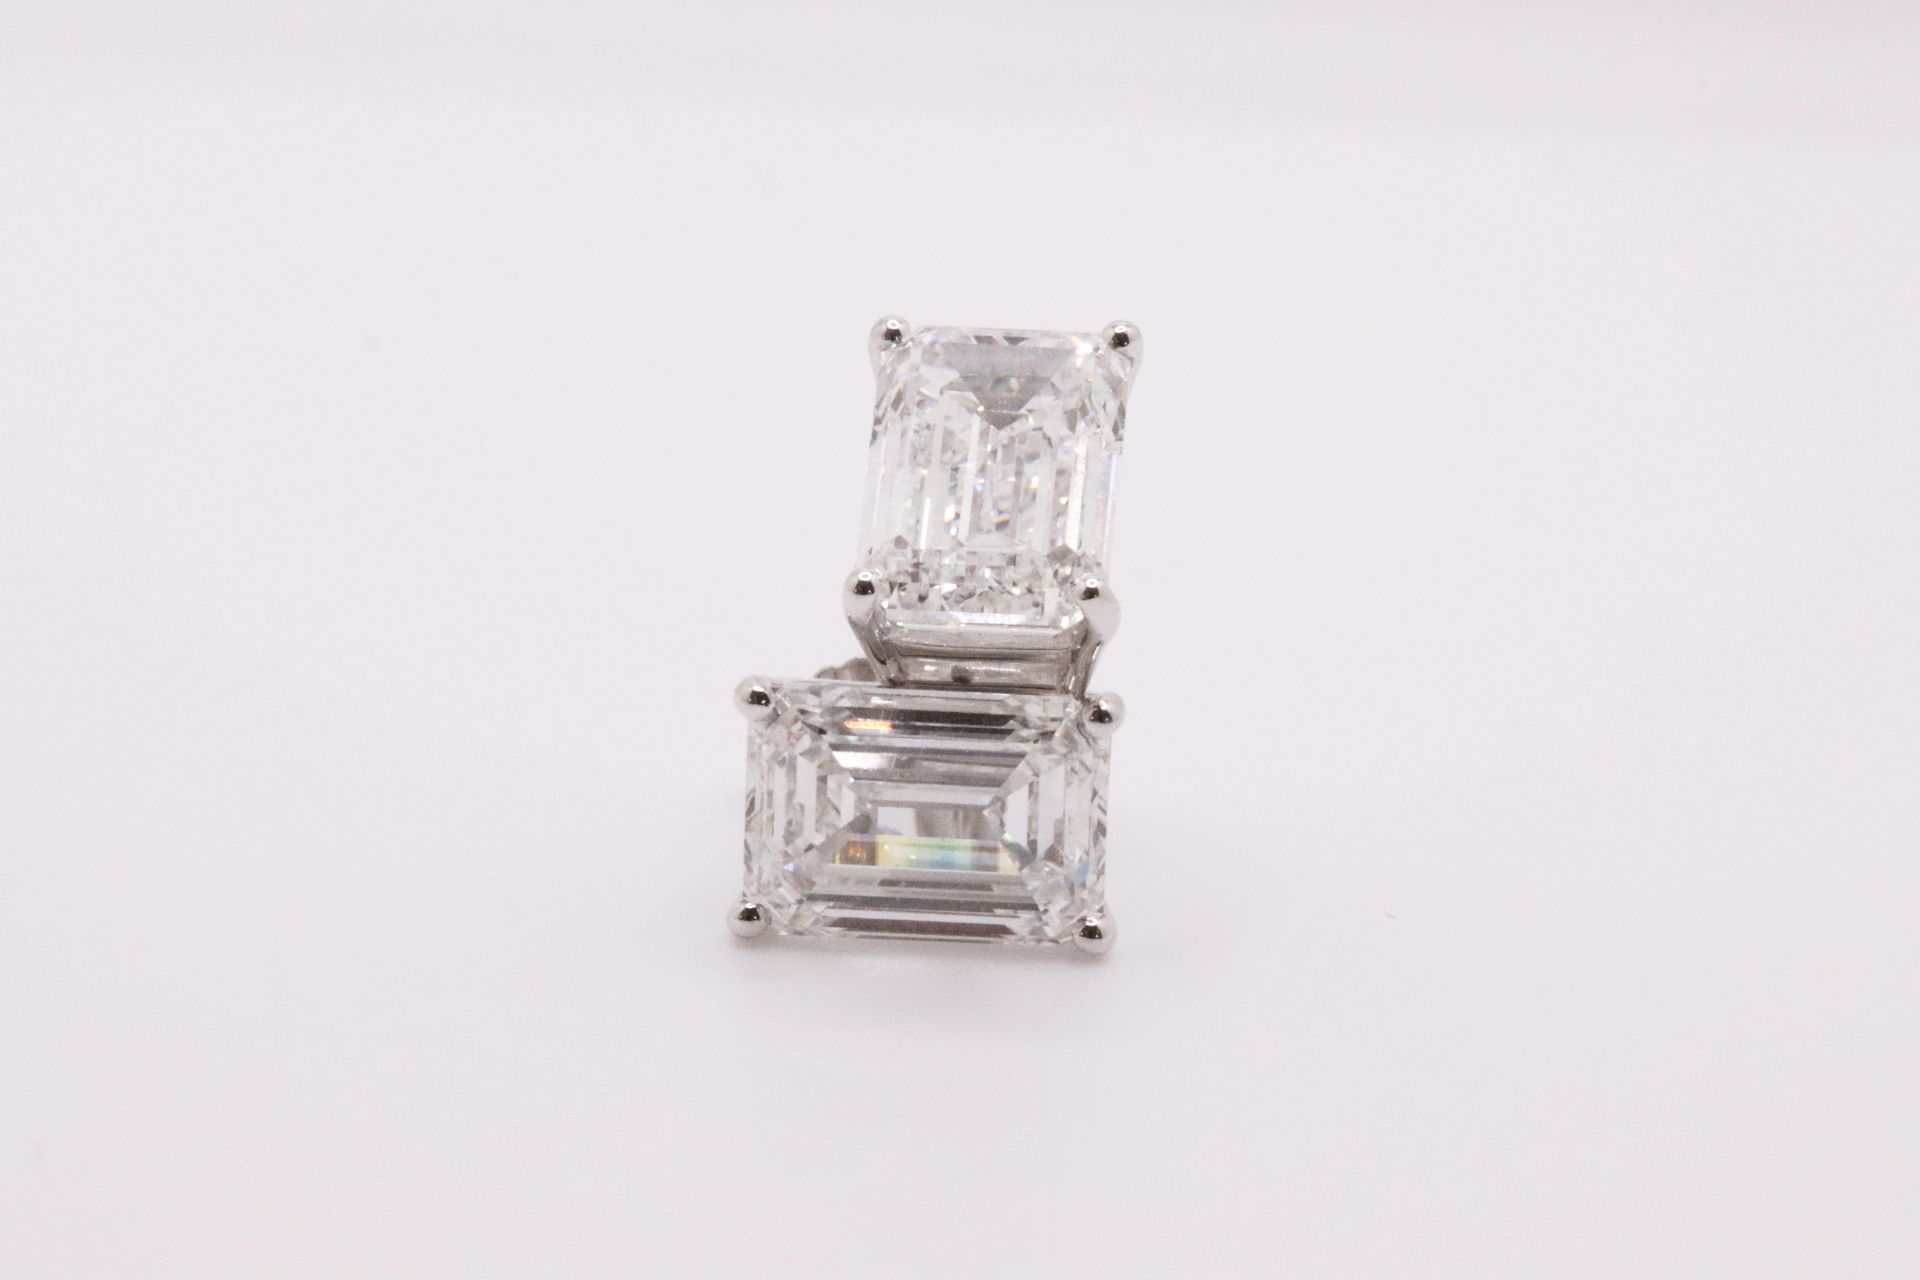 Emerald Cut 9.83 Carat 18kt White Gold Diamond Earrings E Colour VVS2 Clarity - IGI - Image 11 of 19